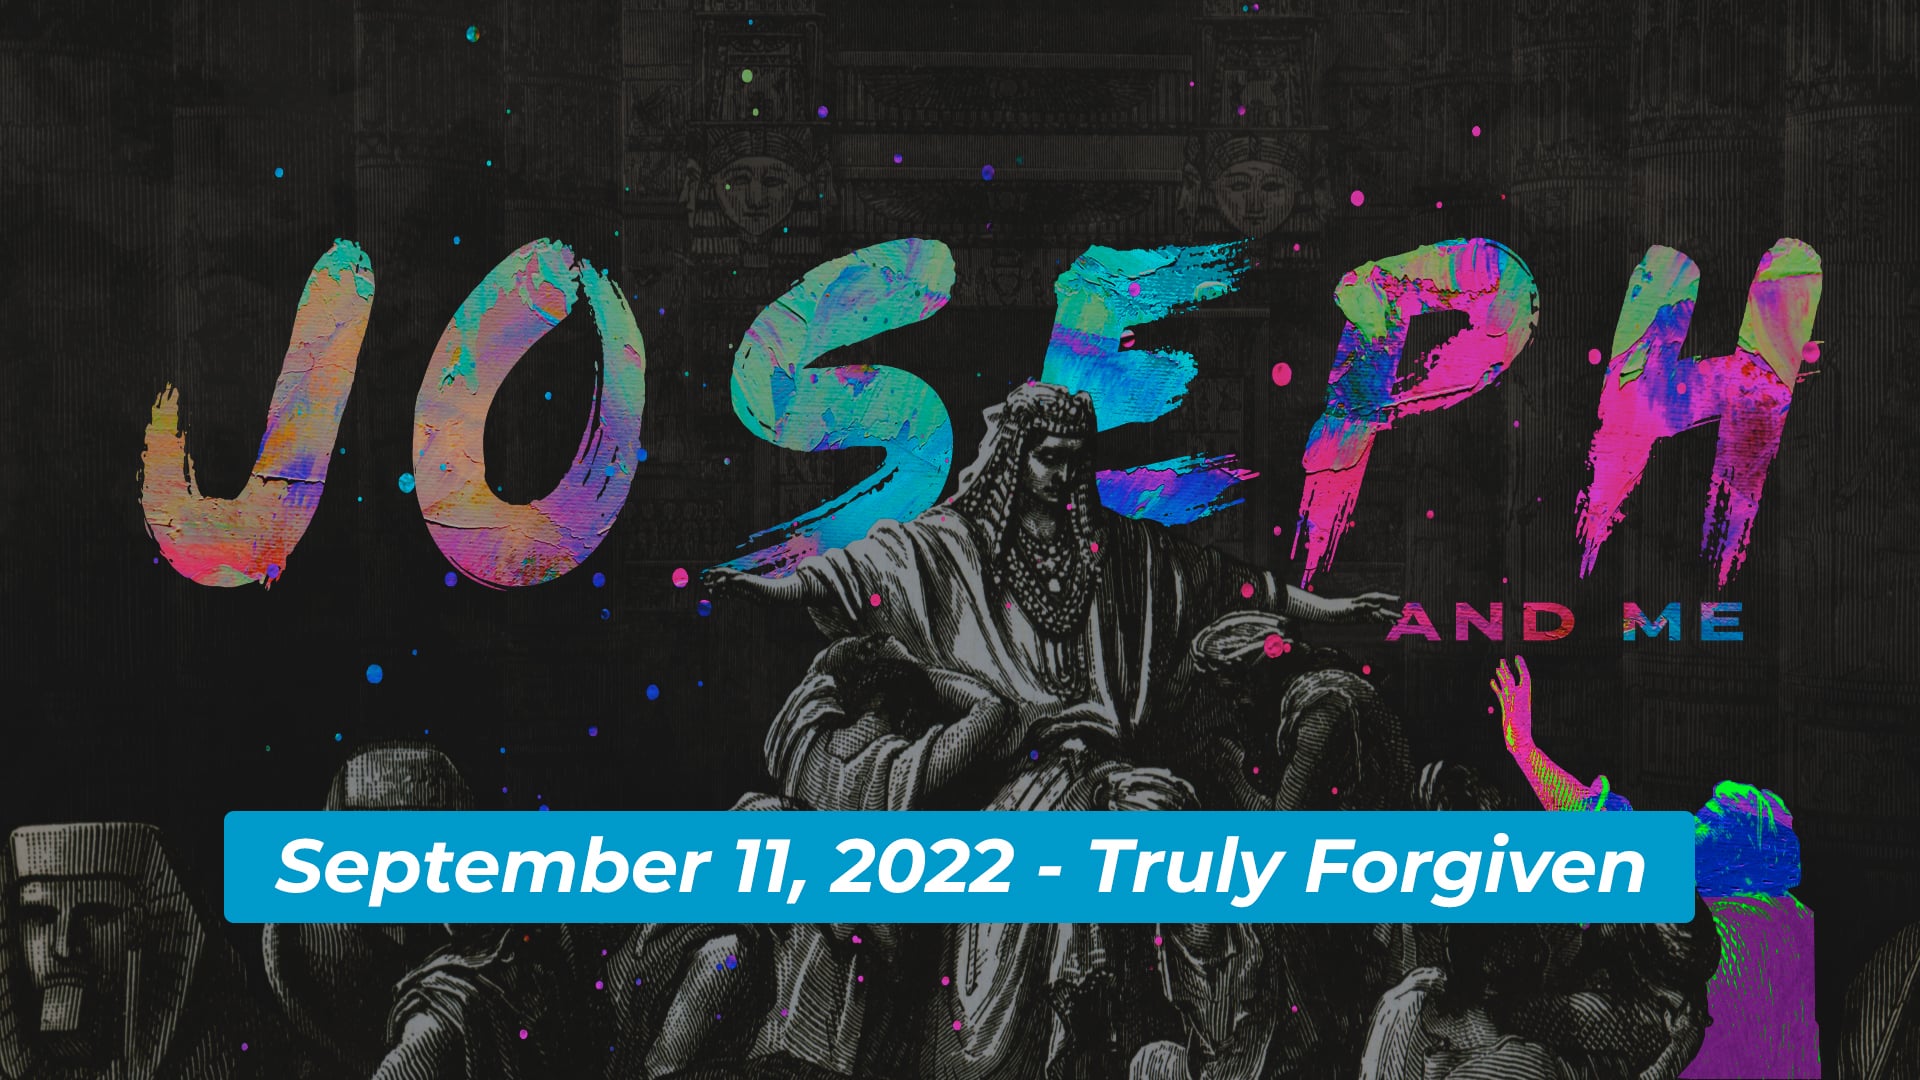 September 11, 2022 - Joseph & Me: Truly Forgiven